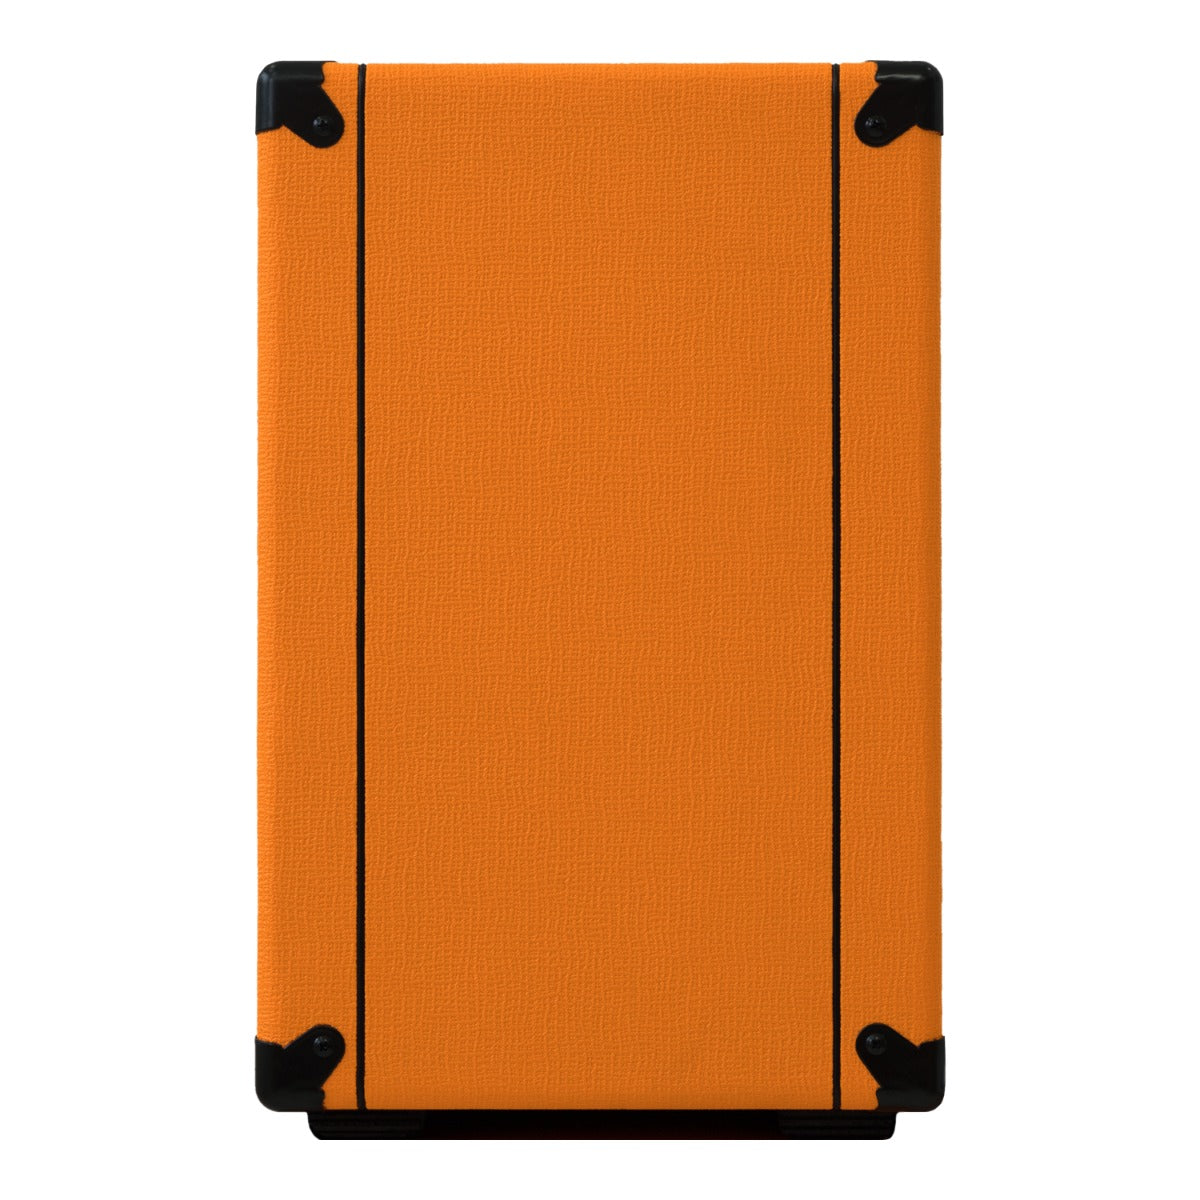 Orange Rocker 32 Stereo Combo Guitar Amplifier view 3